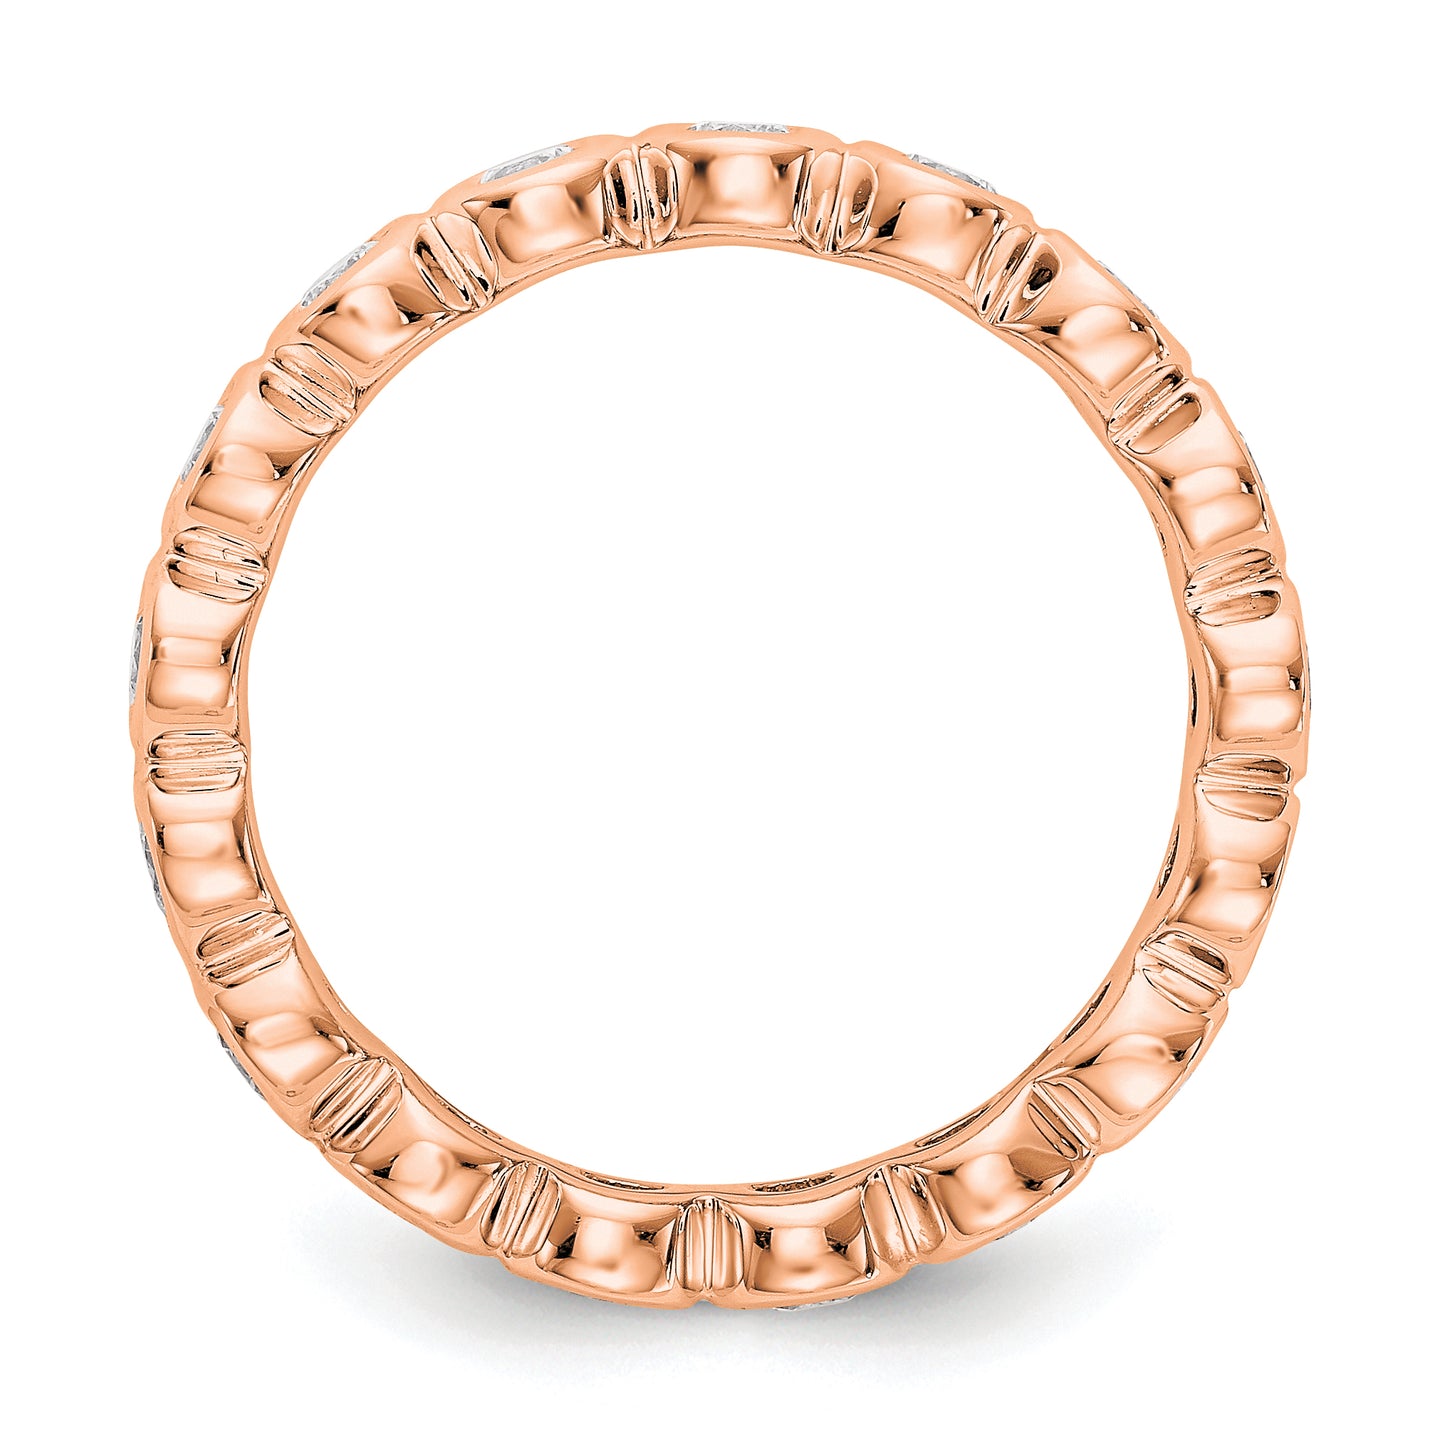 Solid Real 14k Rose Gold Polished 1ct Bezel Set CZ Eternity Wedding Band Ring